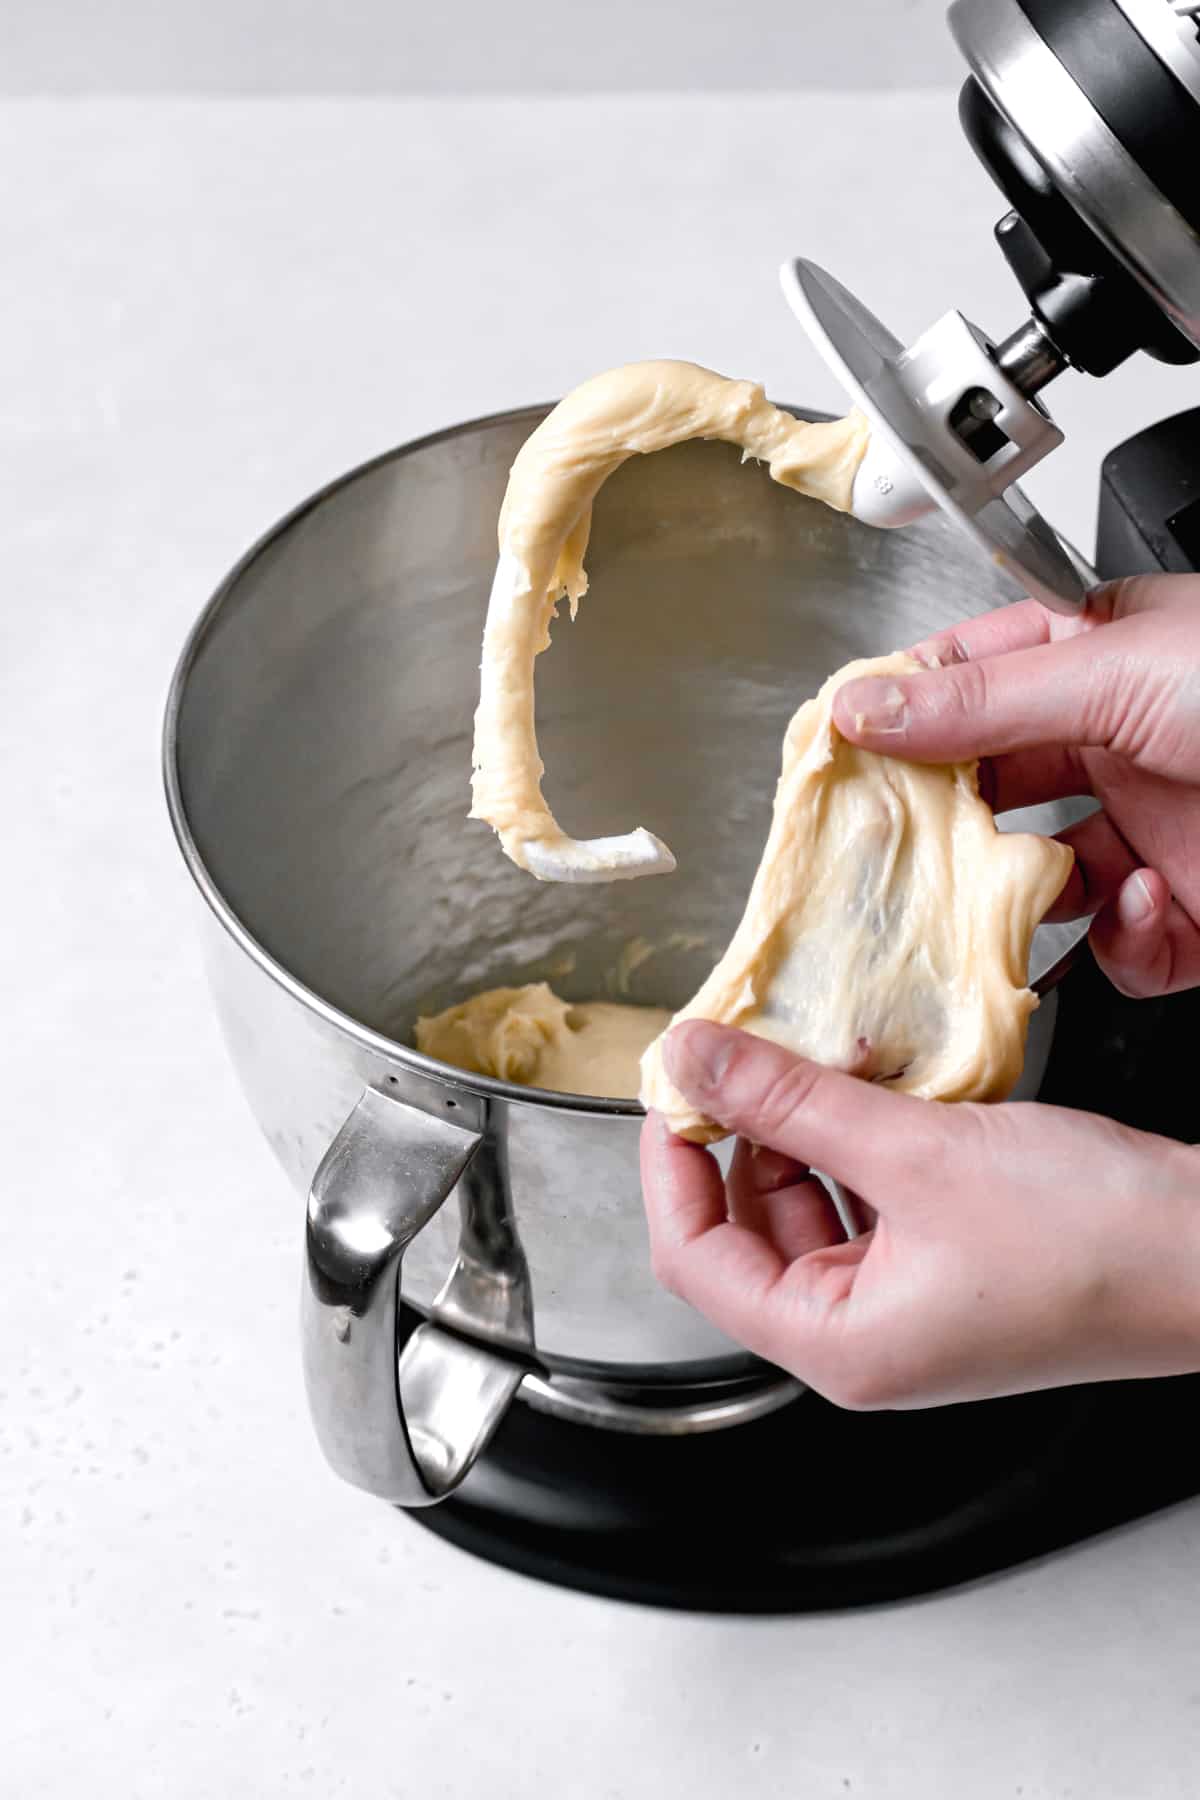 windowpane test of brioche dough.